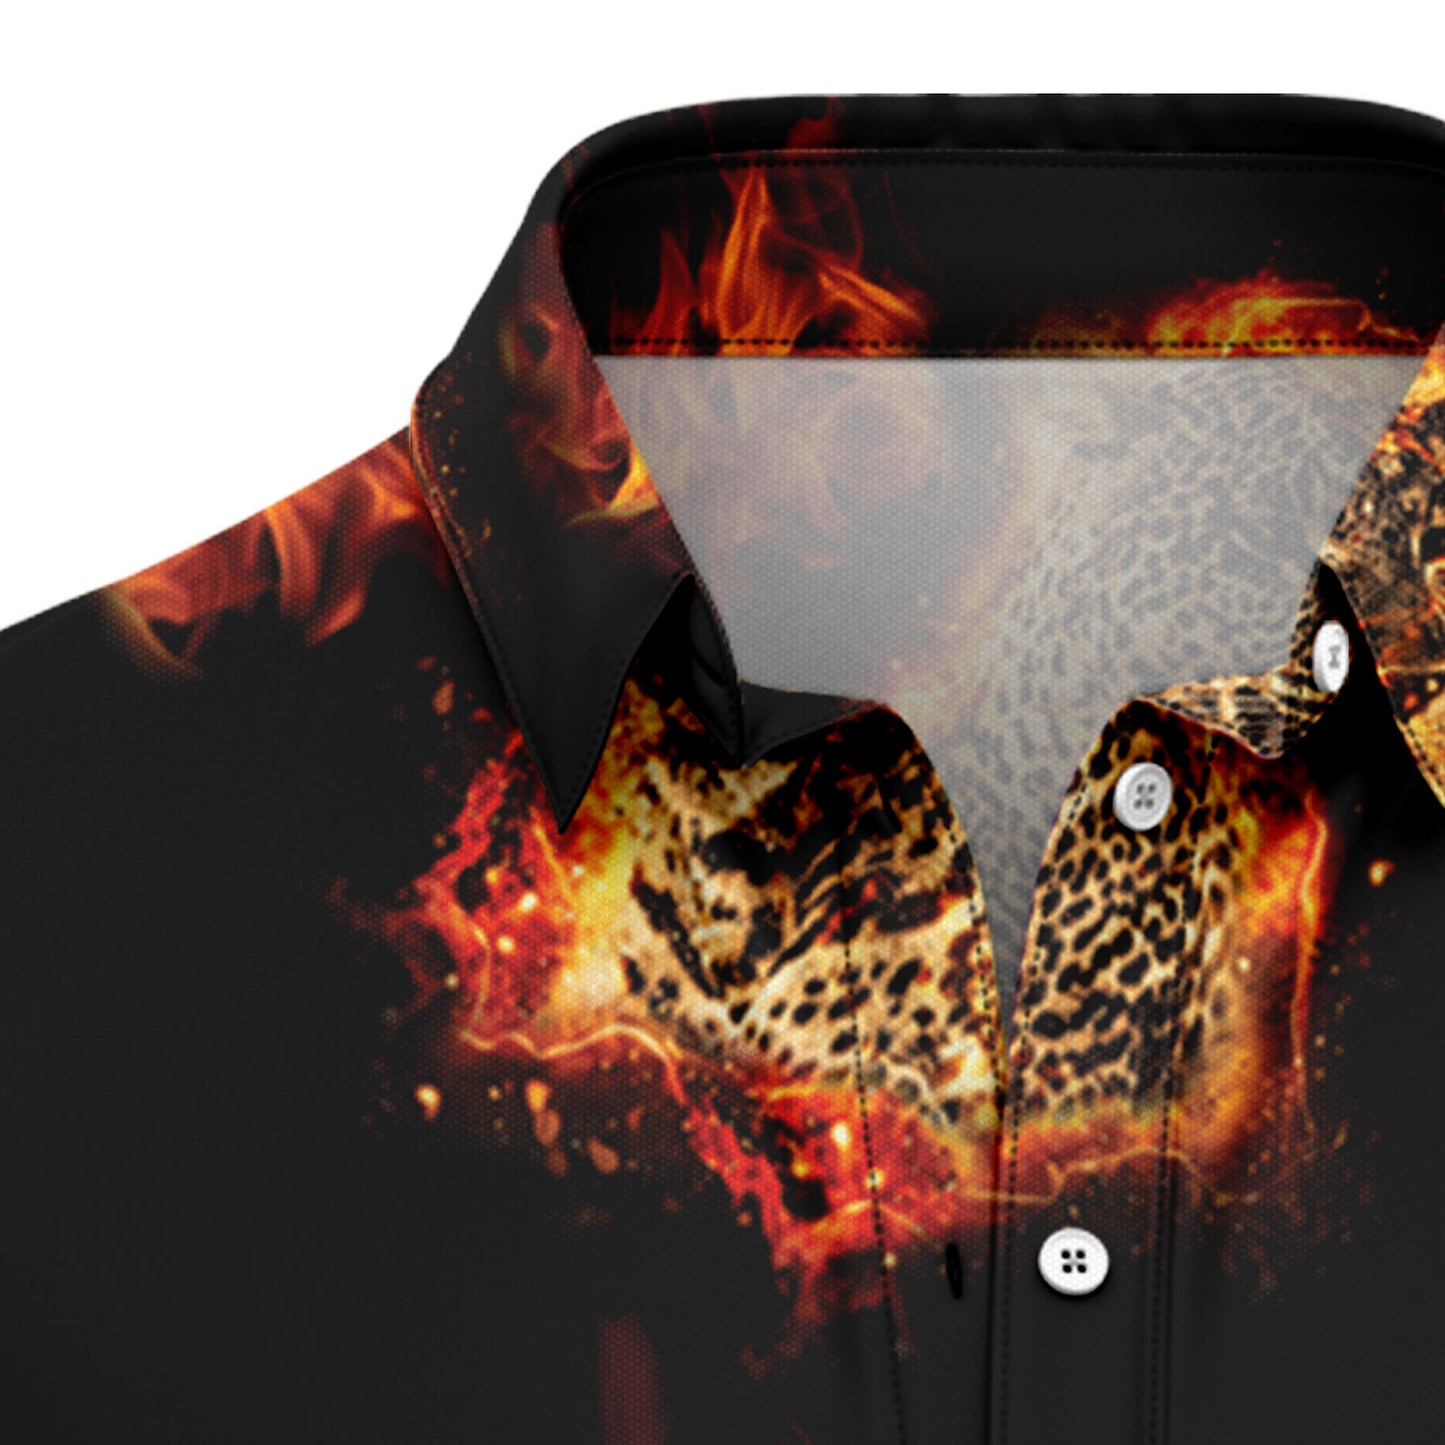 Leopard Fire TG5728 Hawaiian Shirt